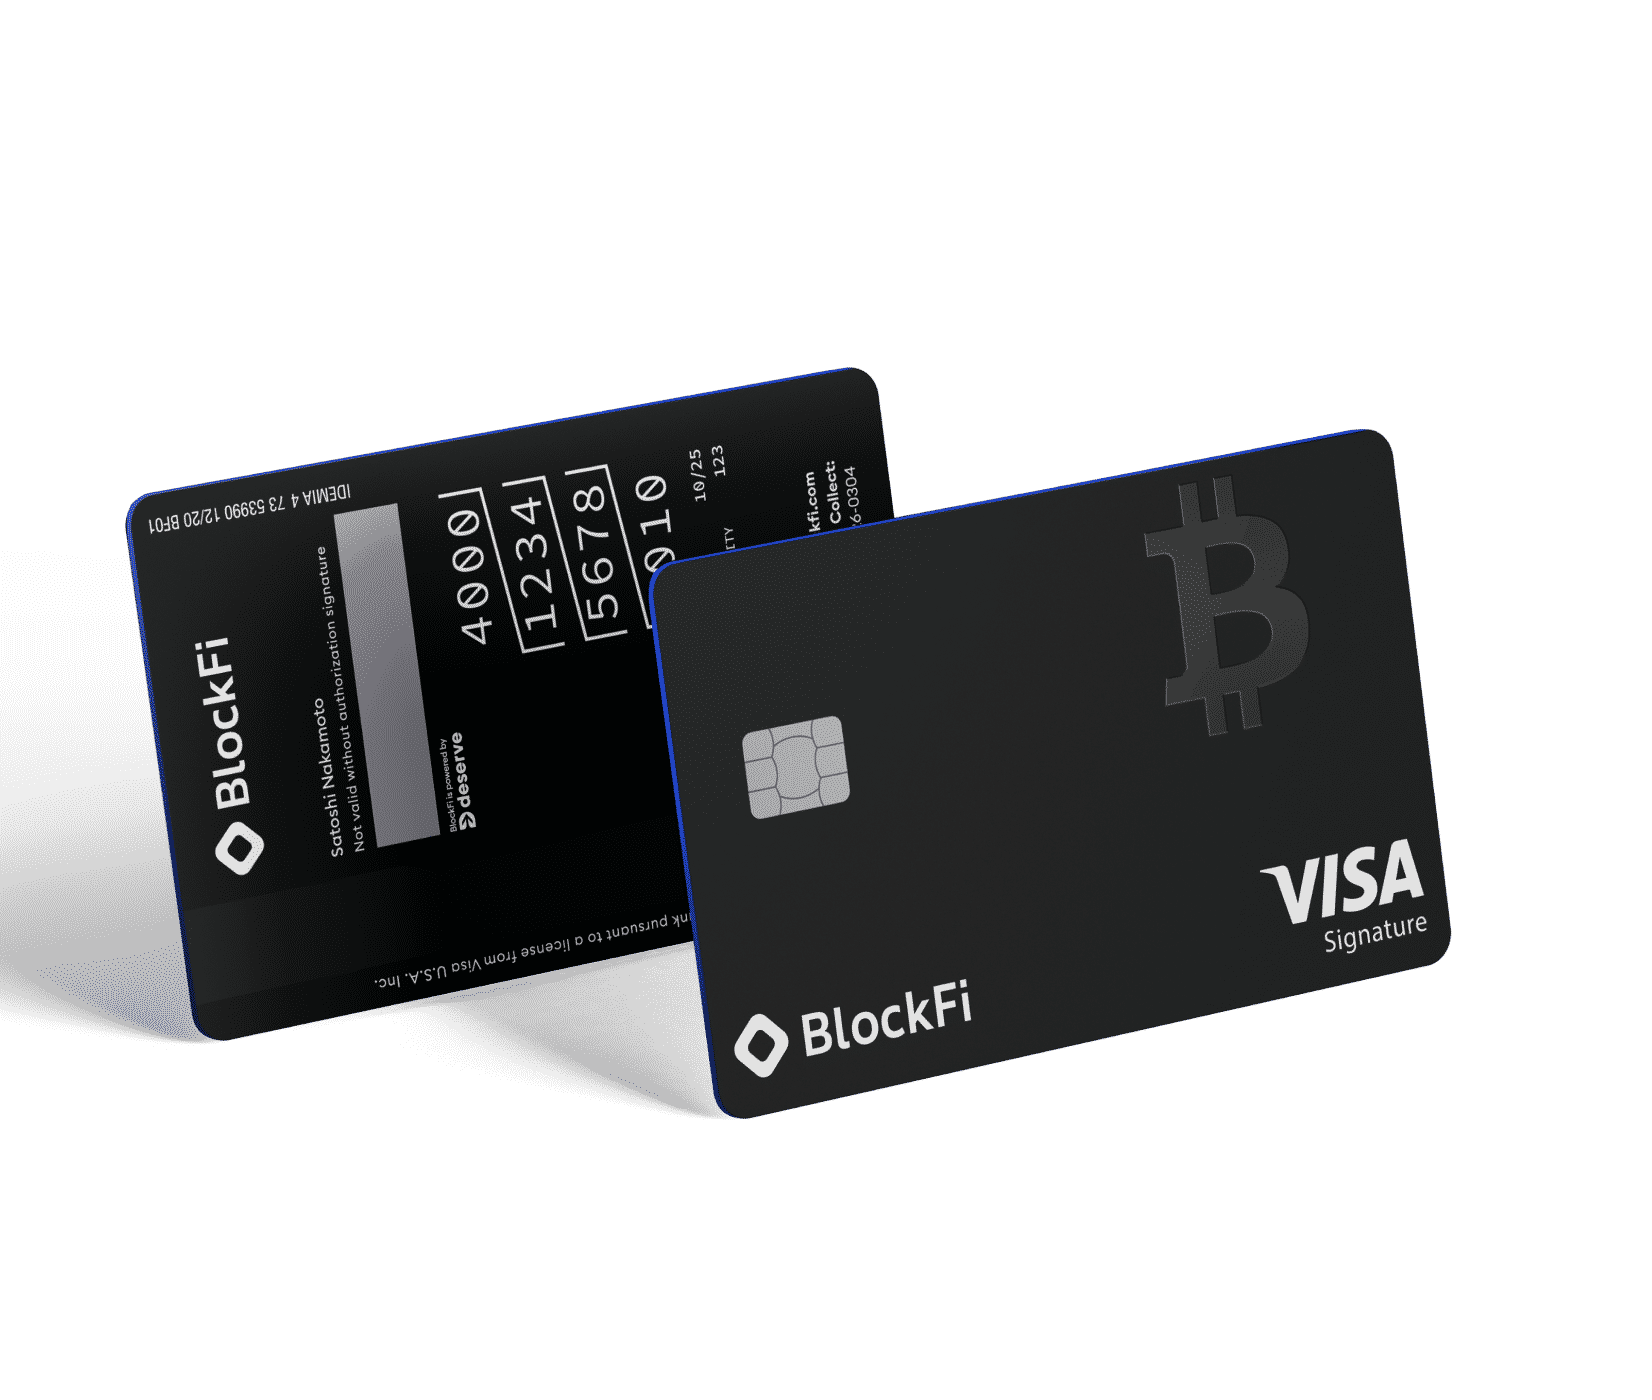 The BlockFi card